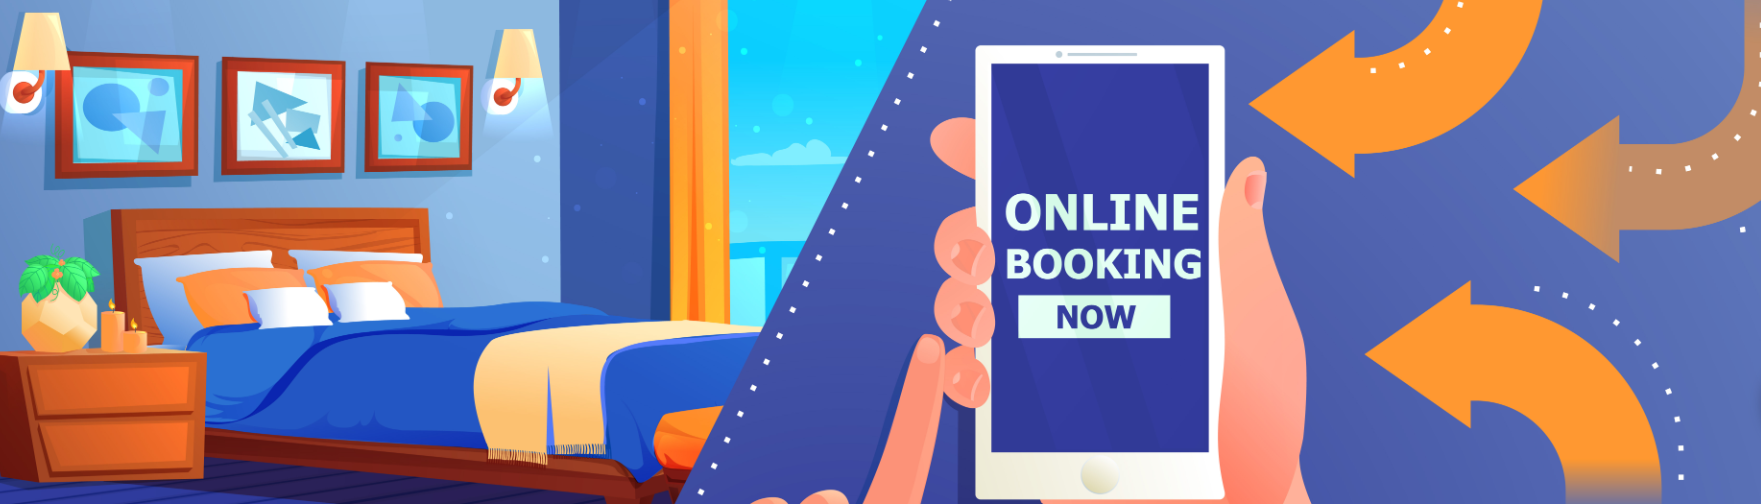 Booking.com - flights Tickets : Get Upto 78% OFF